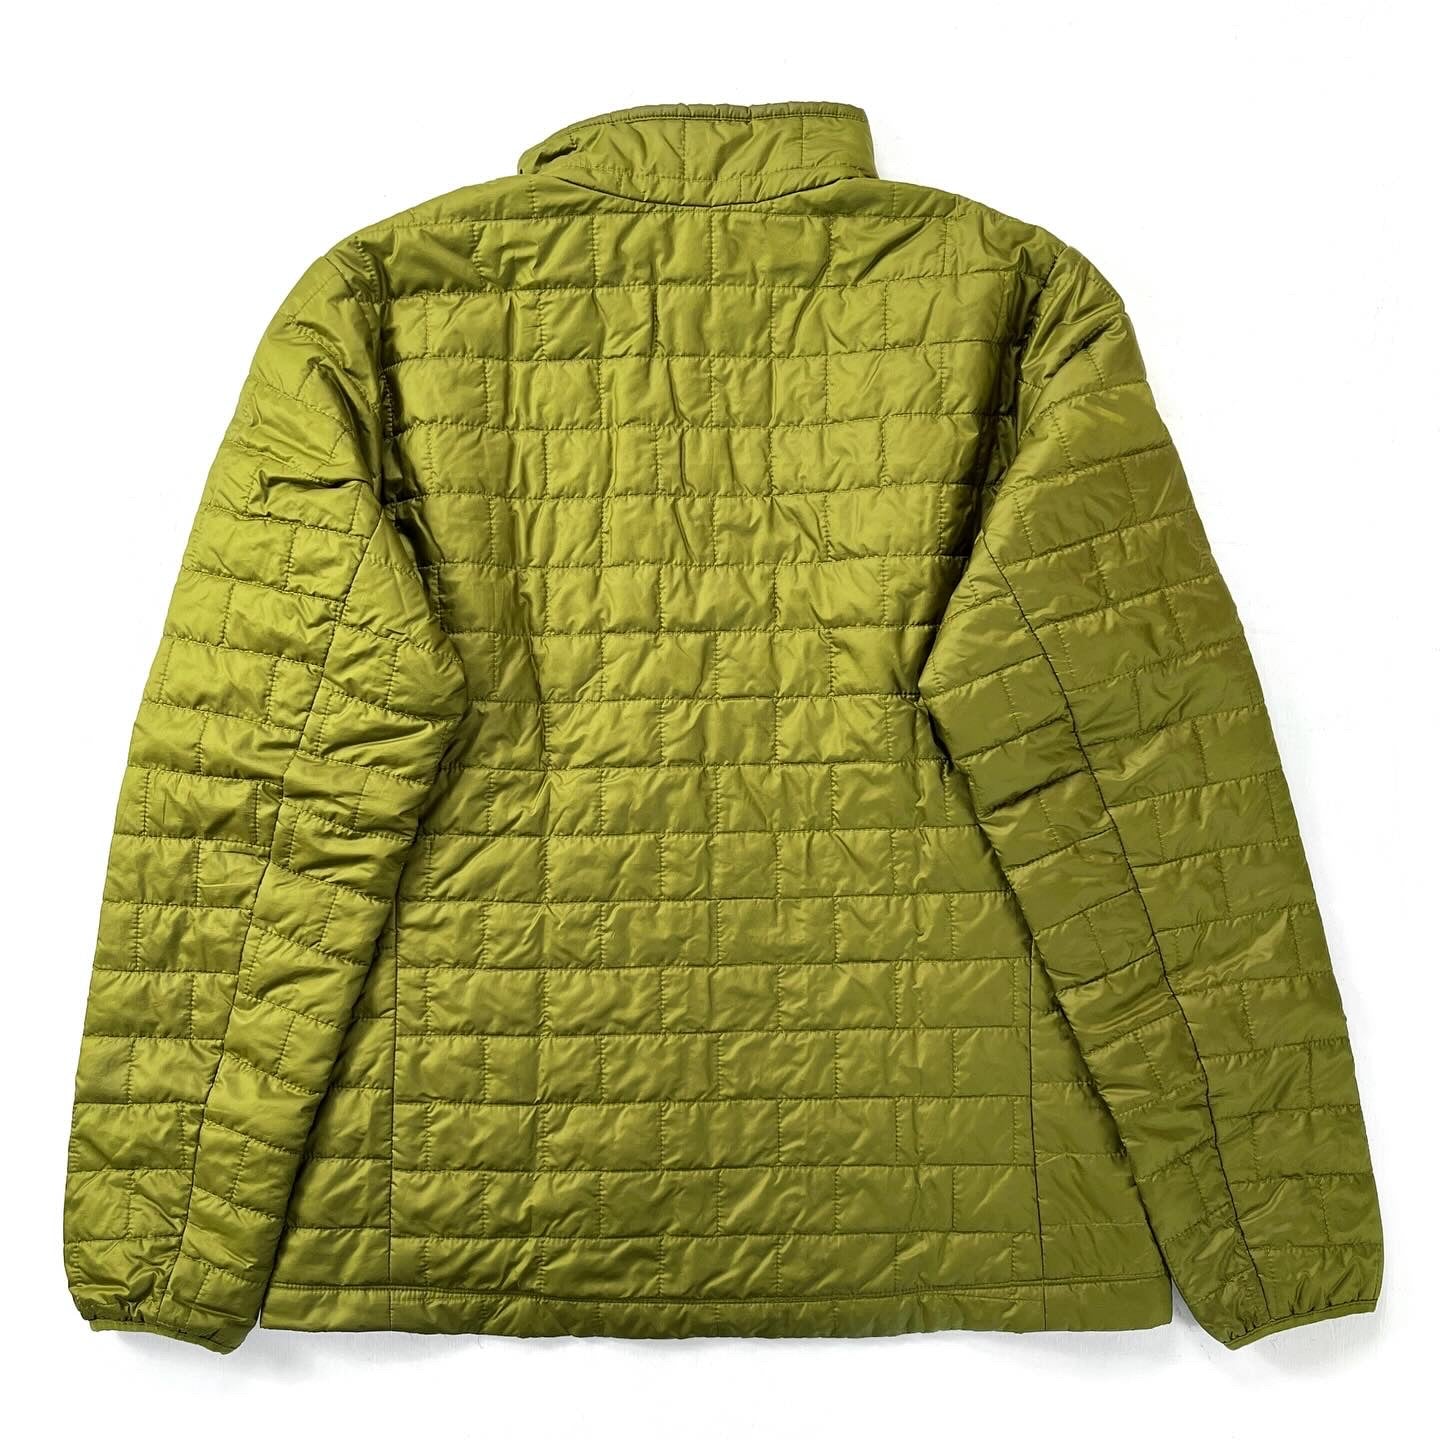 2019 Patagonia Mens Nano Puff Insulated Jacket, Herb Green (L)